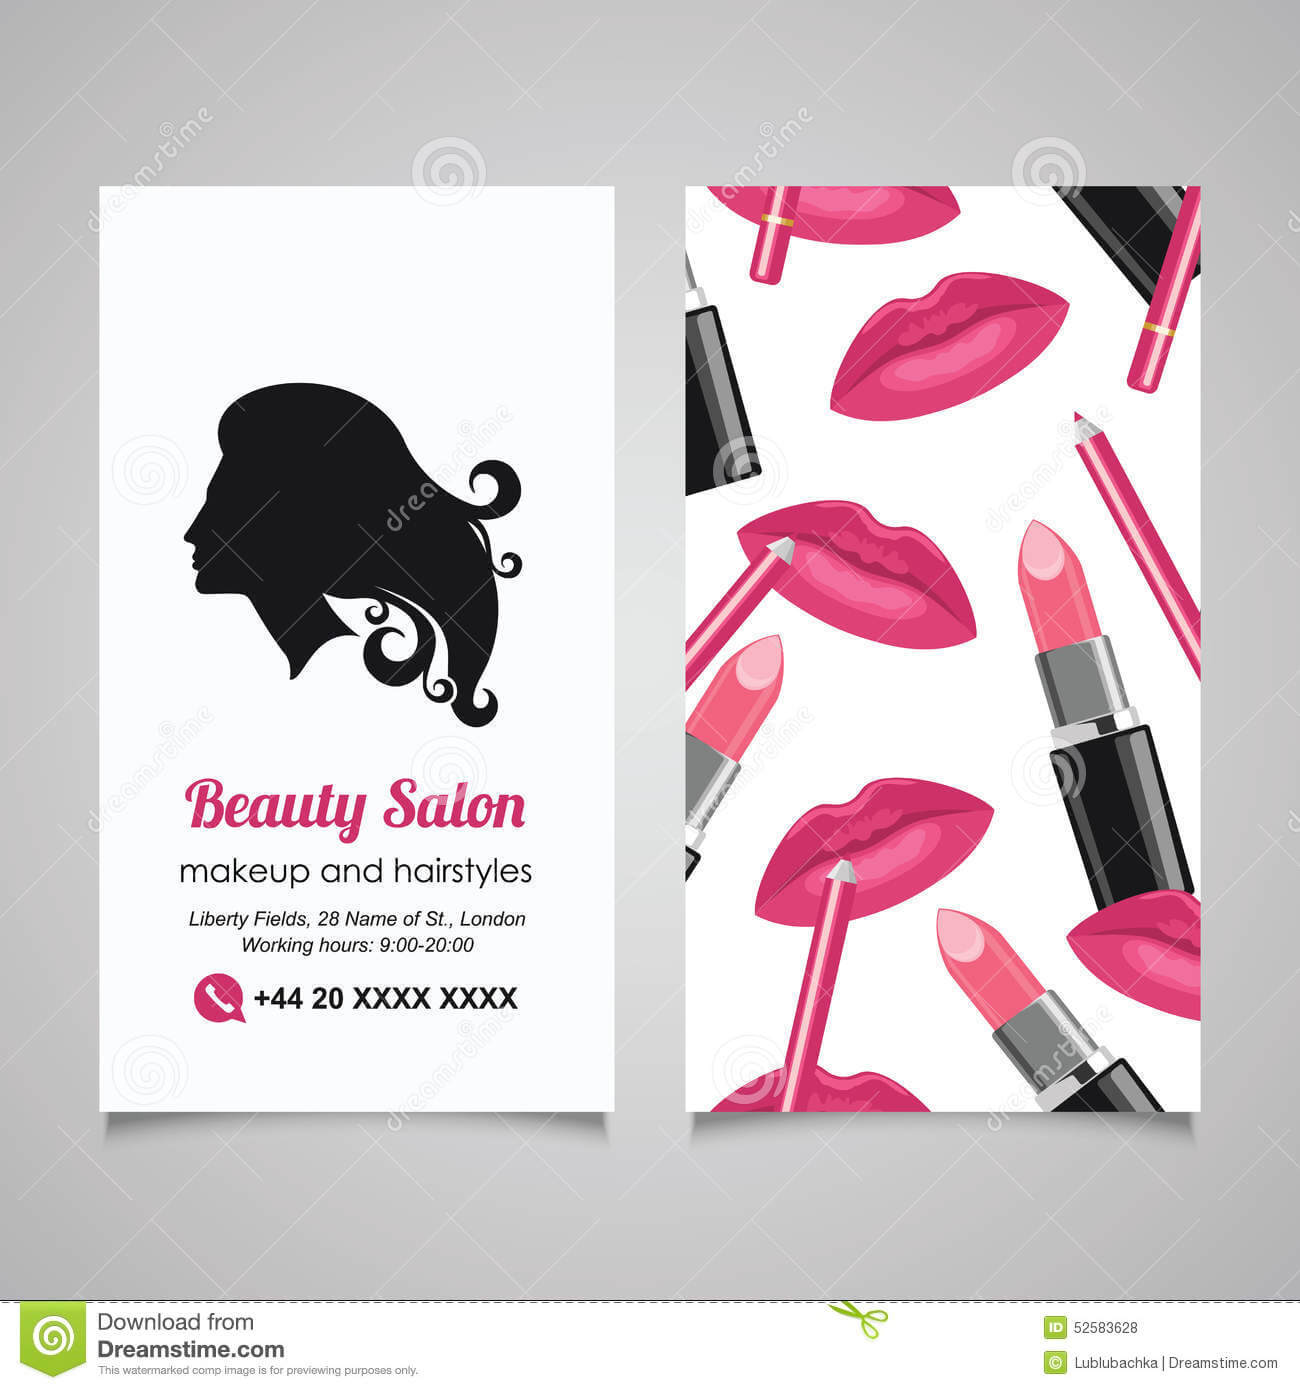 Beauty Salon Business Card Design Template With Beautiful In Hair Salon Business Card Template